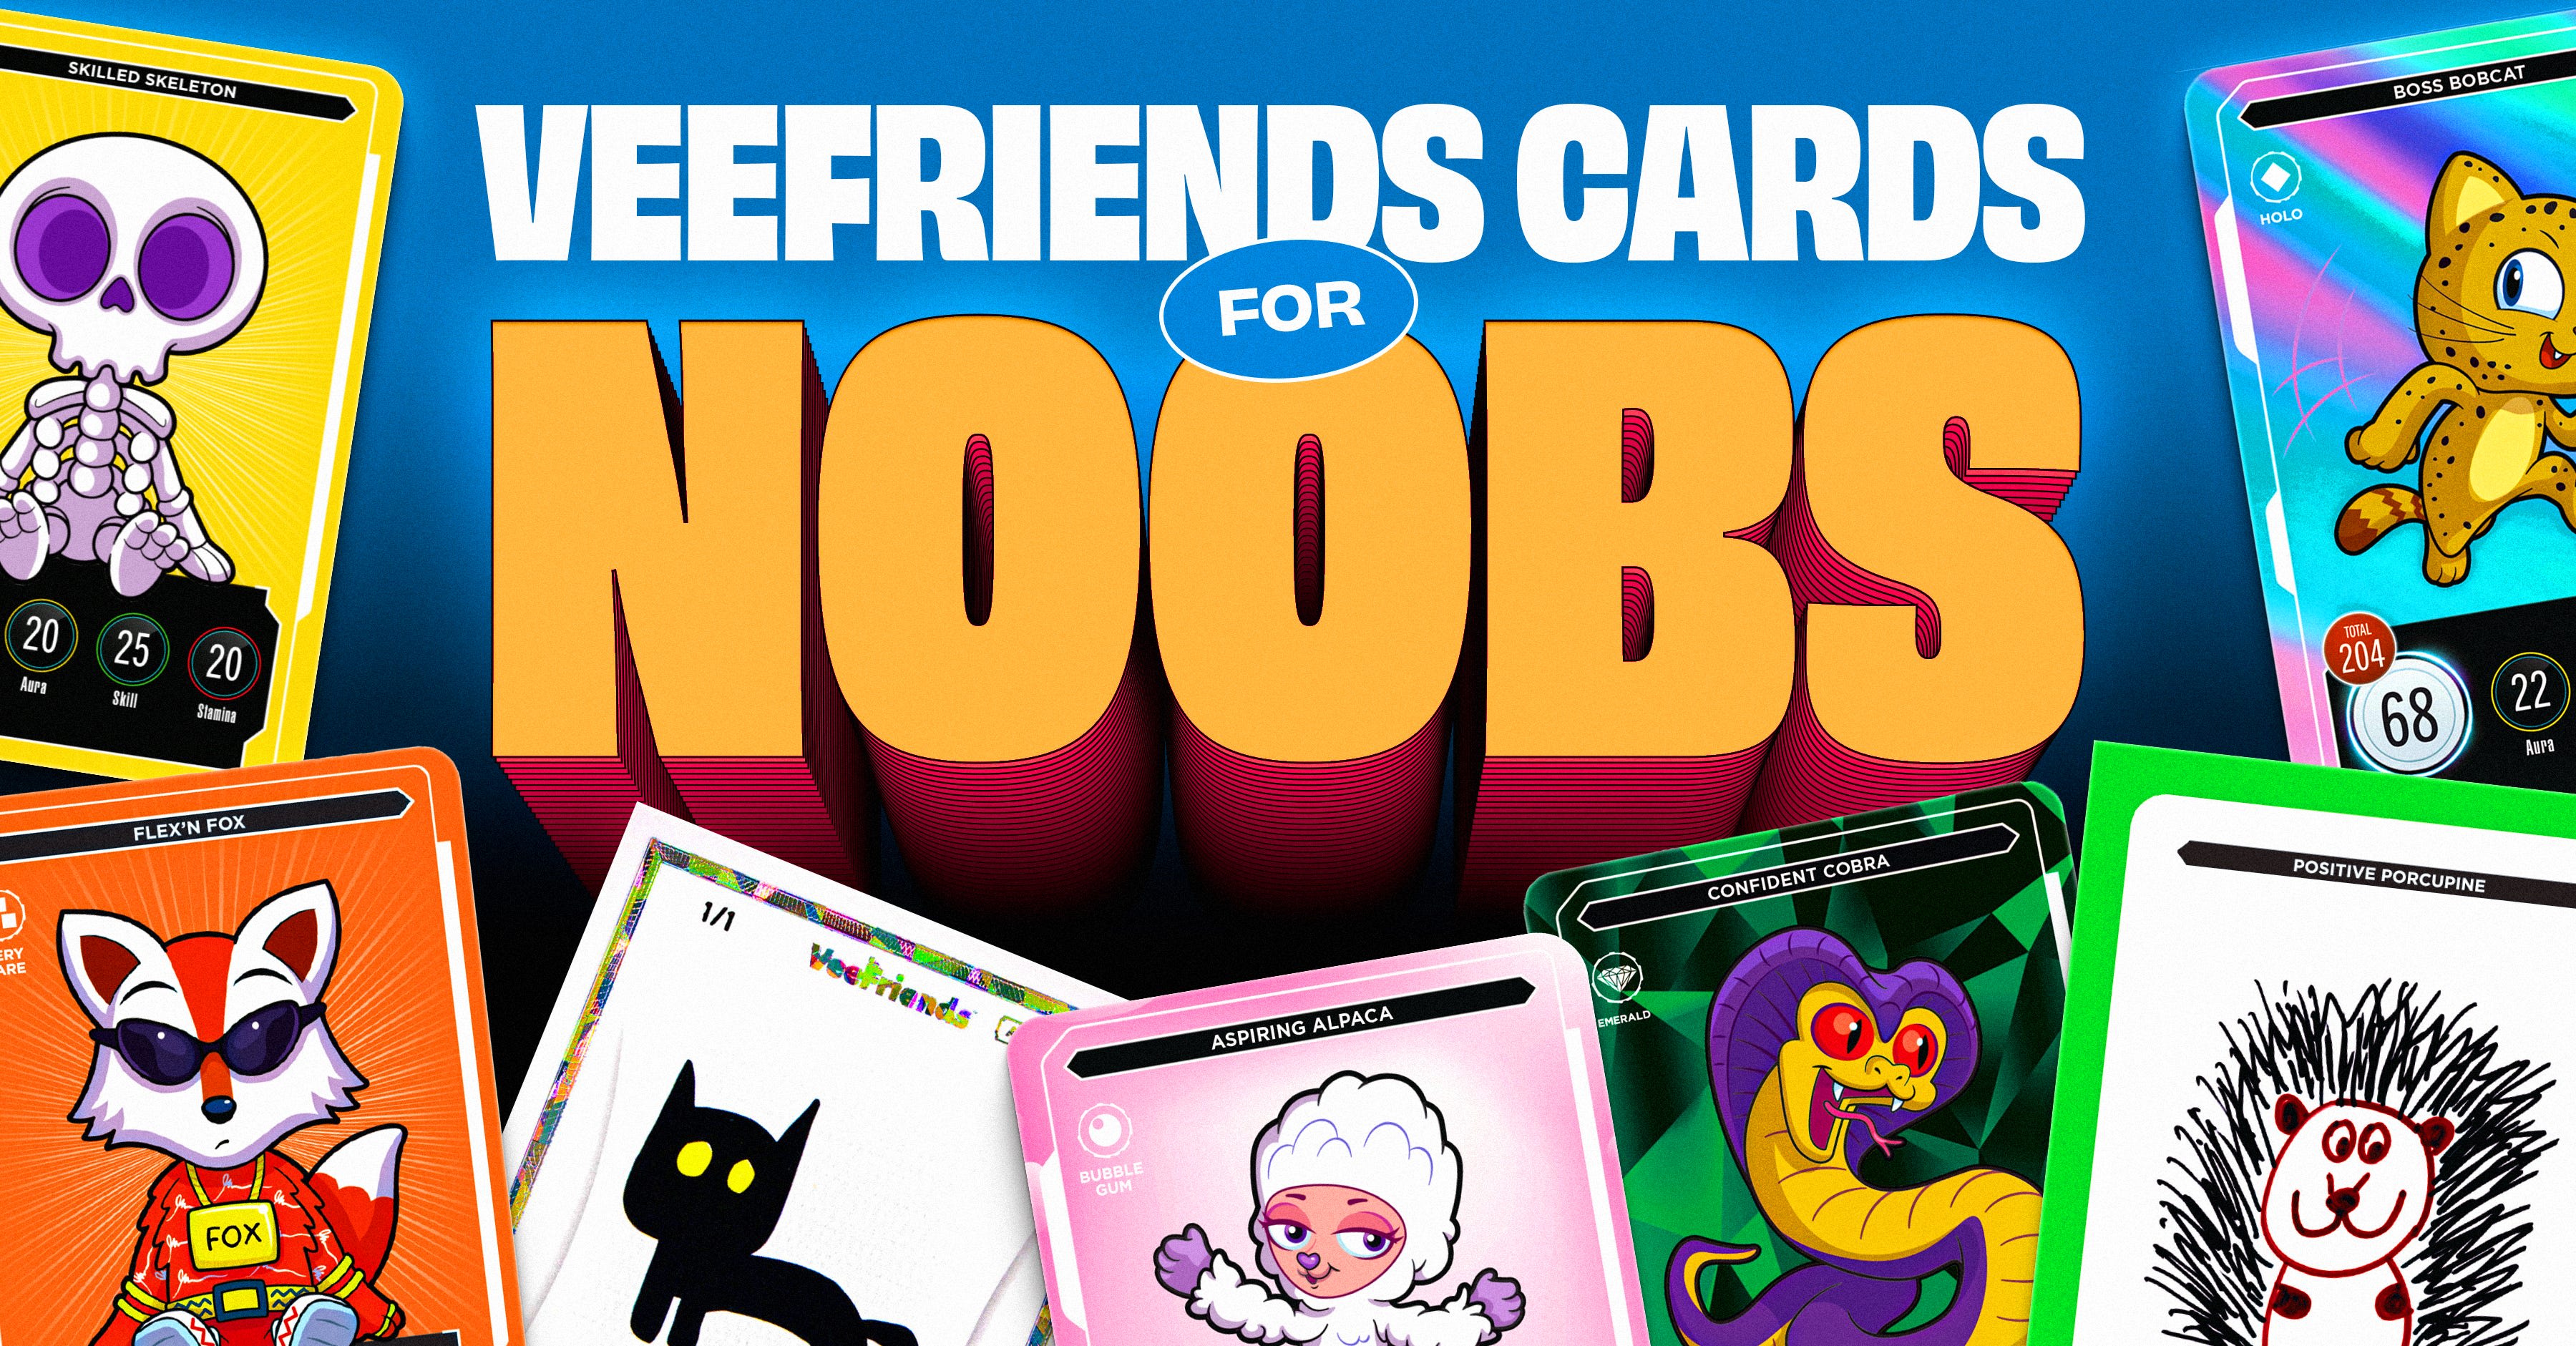 VeeFriends Cards for a N00b in December 2023